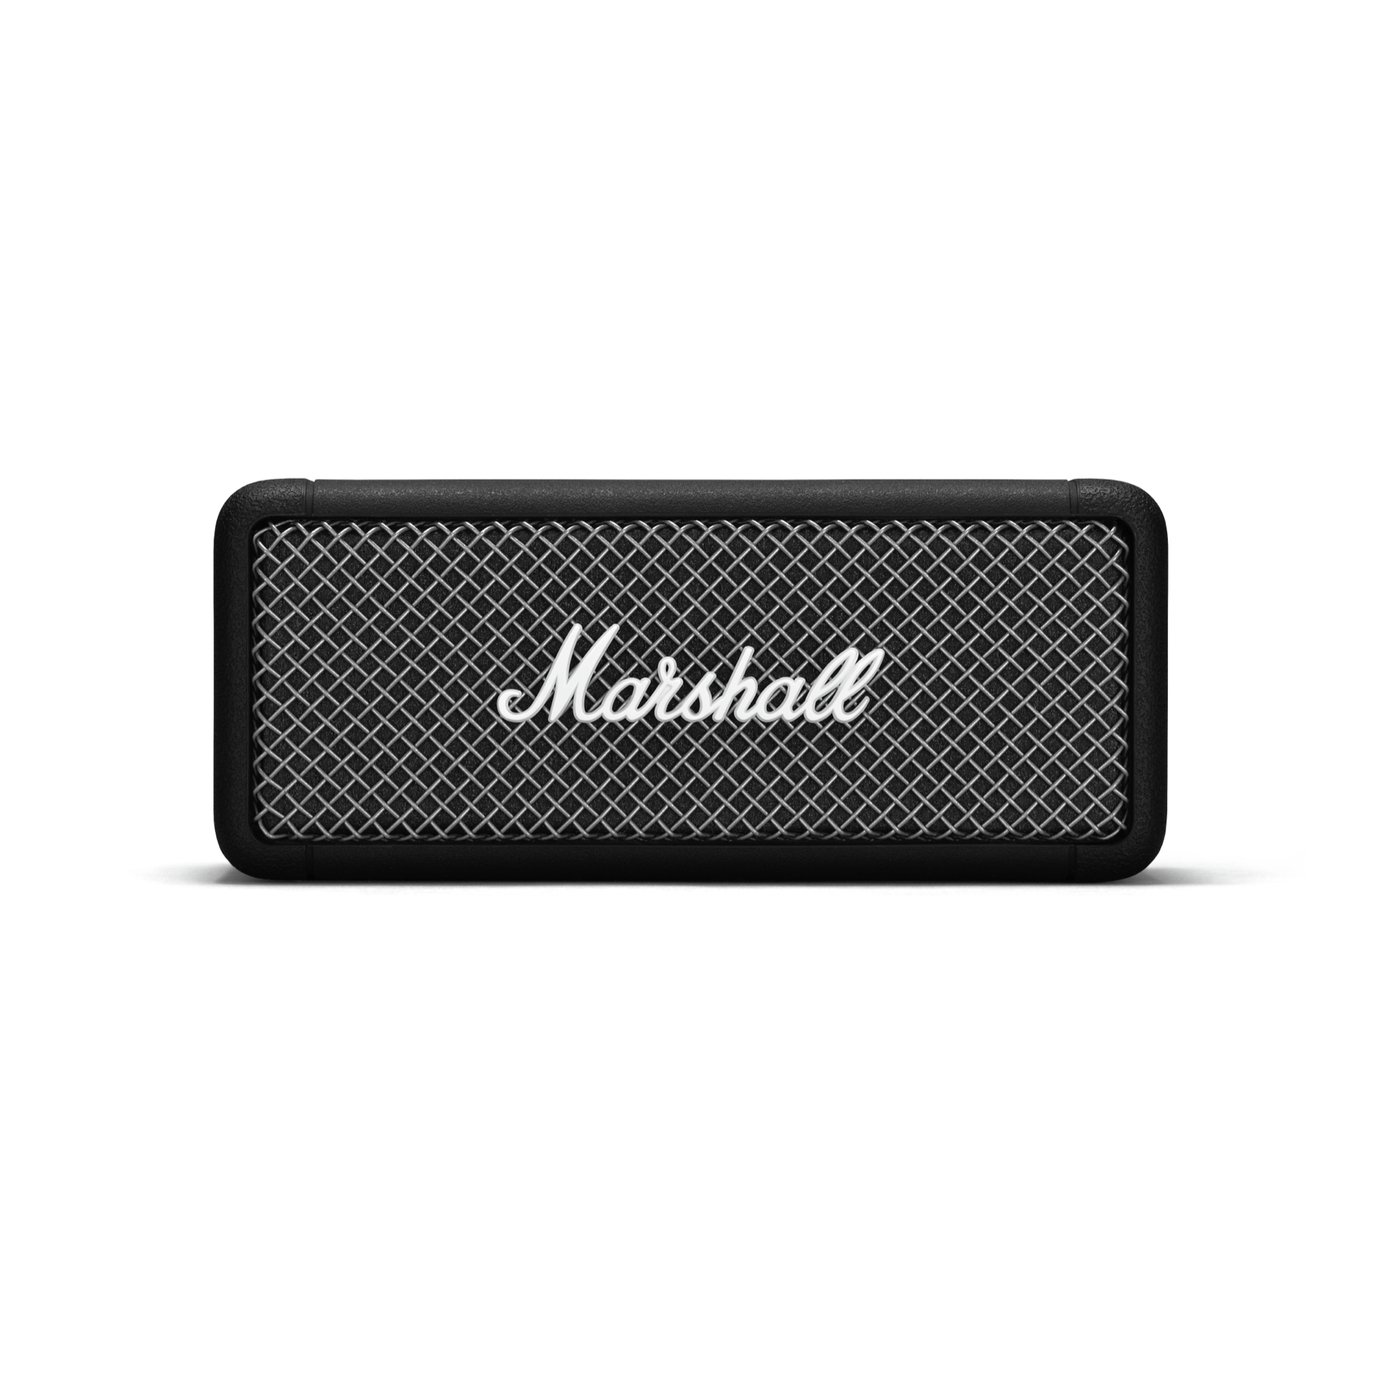 Marshall Emberton Portable Wireless Speaker Review